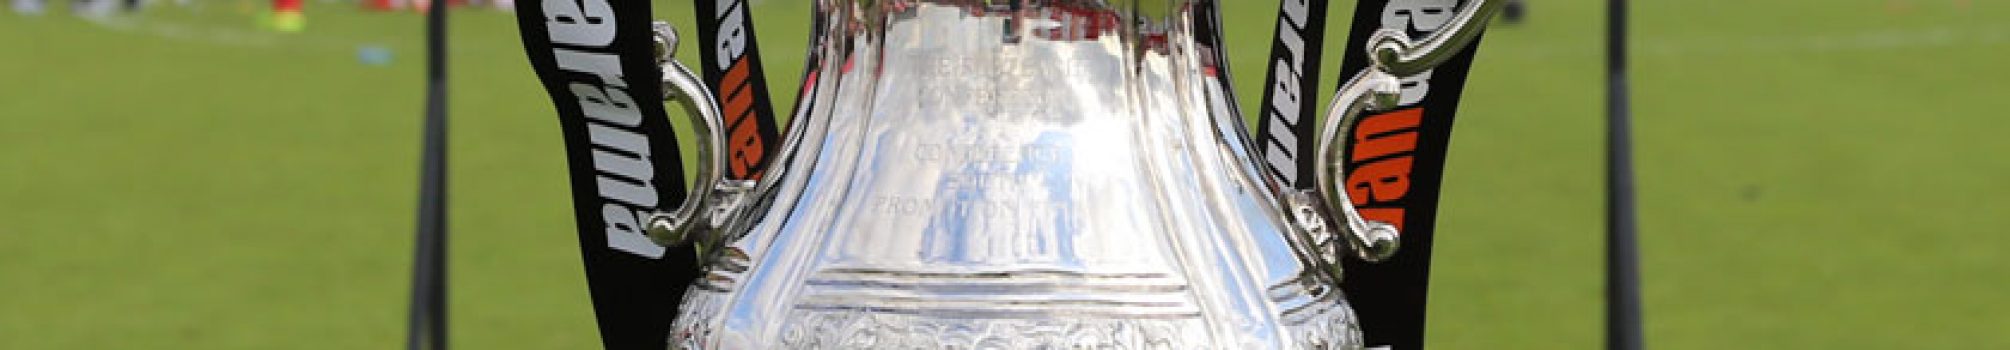 vanarama trophy